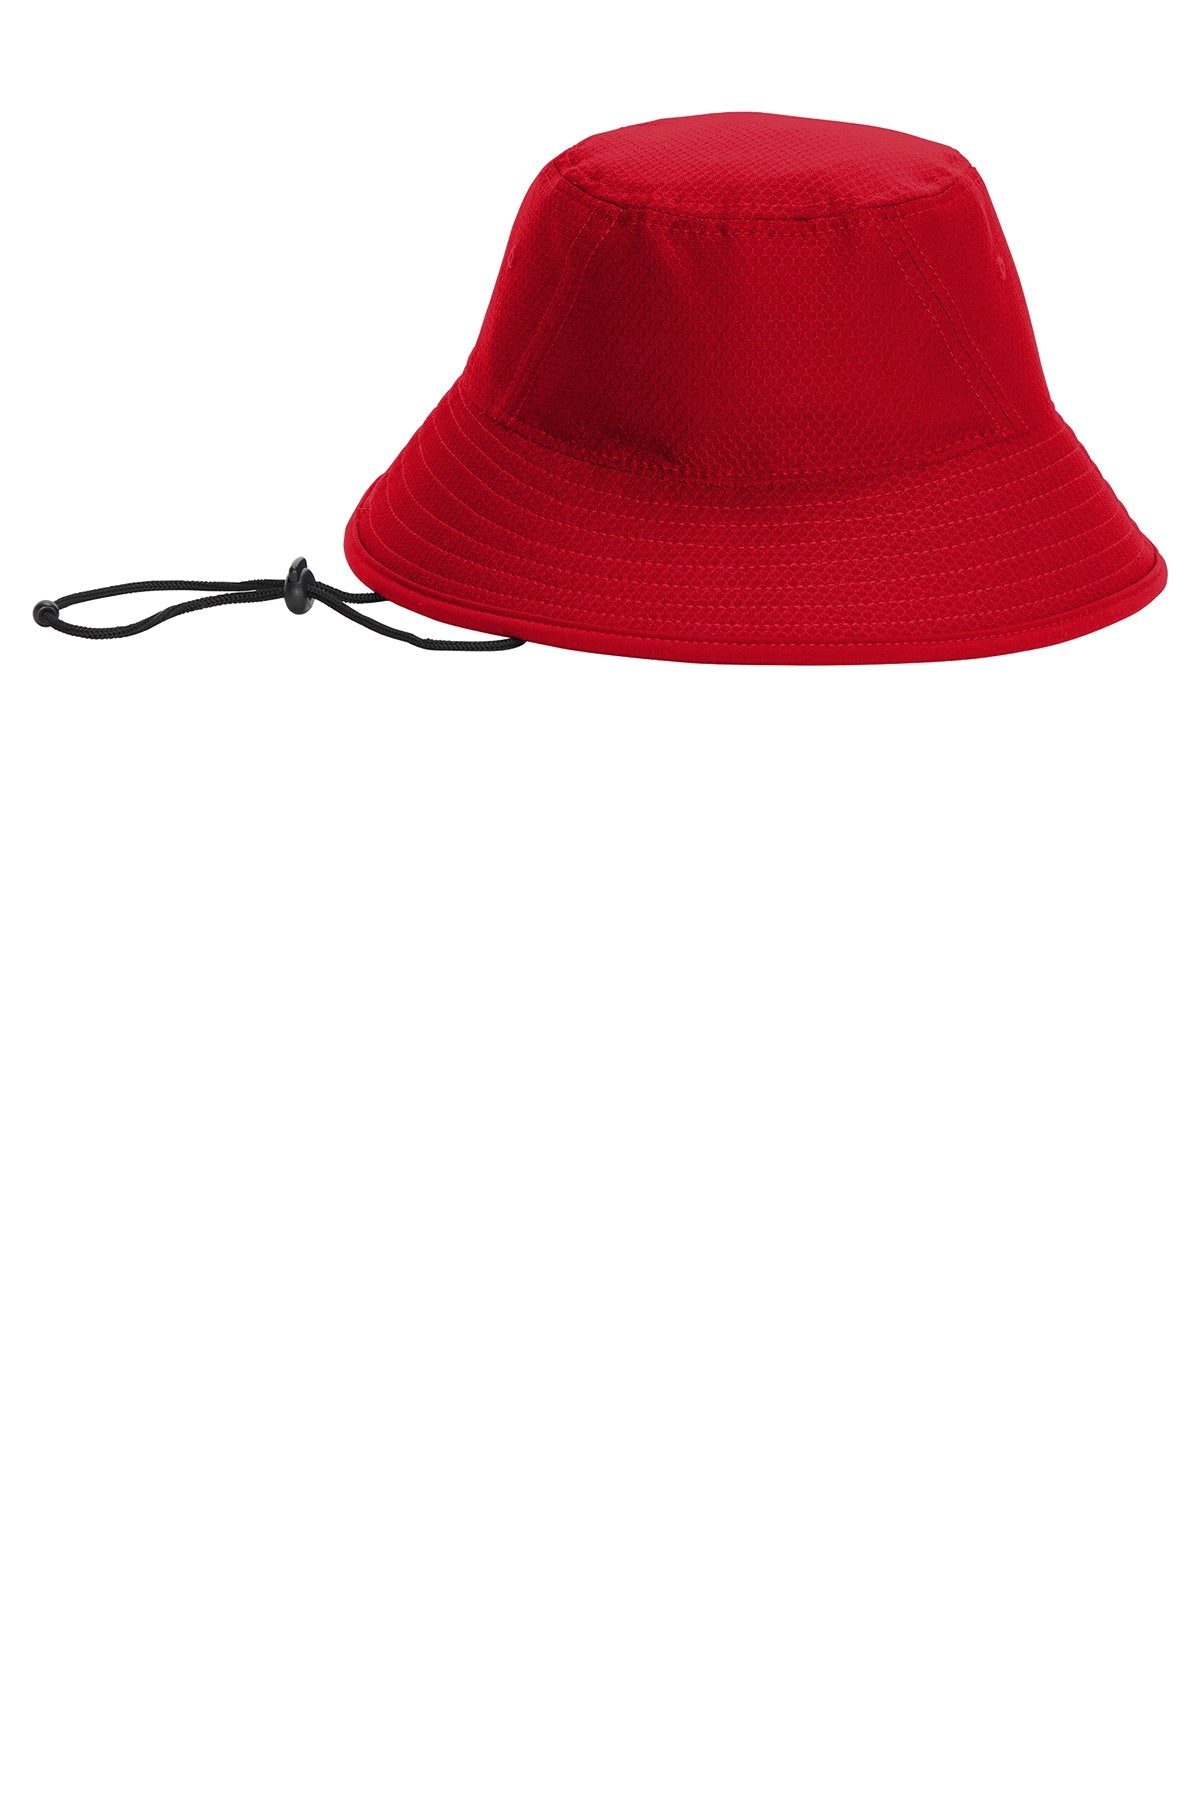 New Era Hex Era Branded Bucket Hats, Scarlet